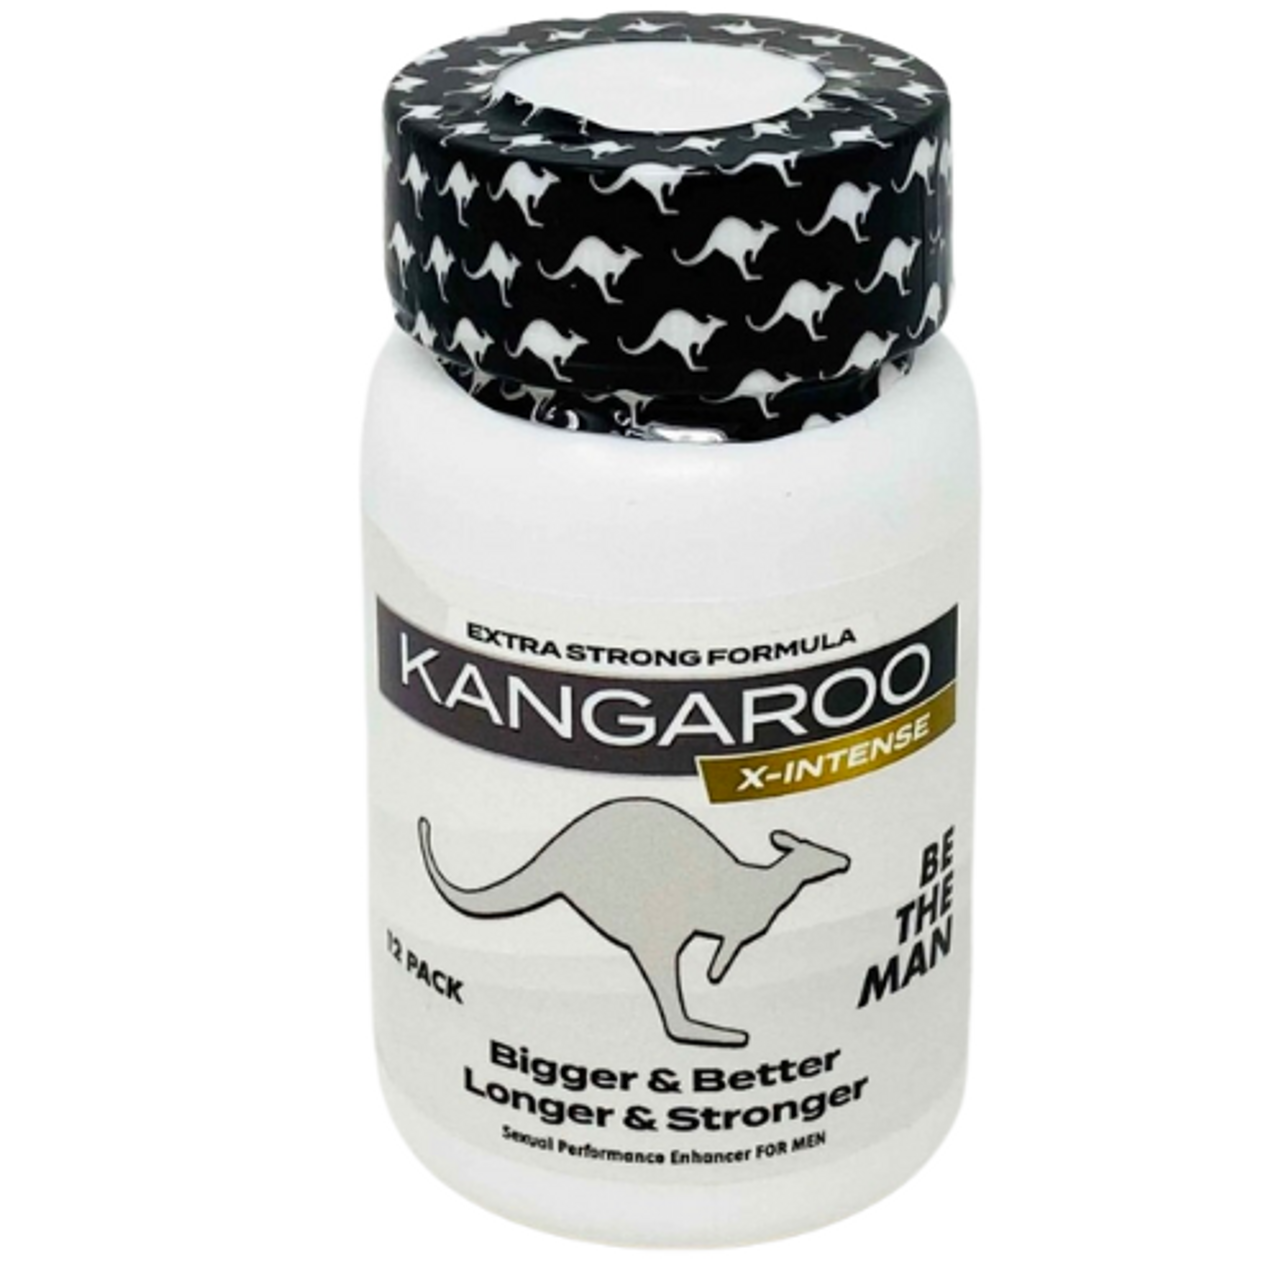 Kangaroo White X-intense 12ct Bottle Male Enhancement Pills | Buy sex supplements online at Condom Depot